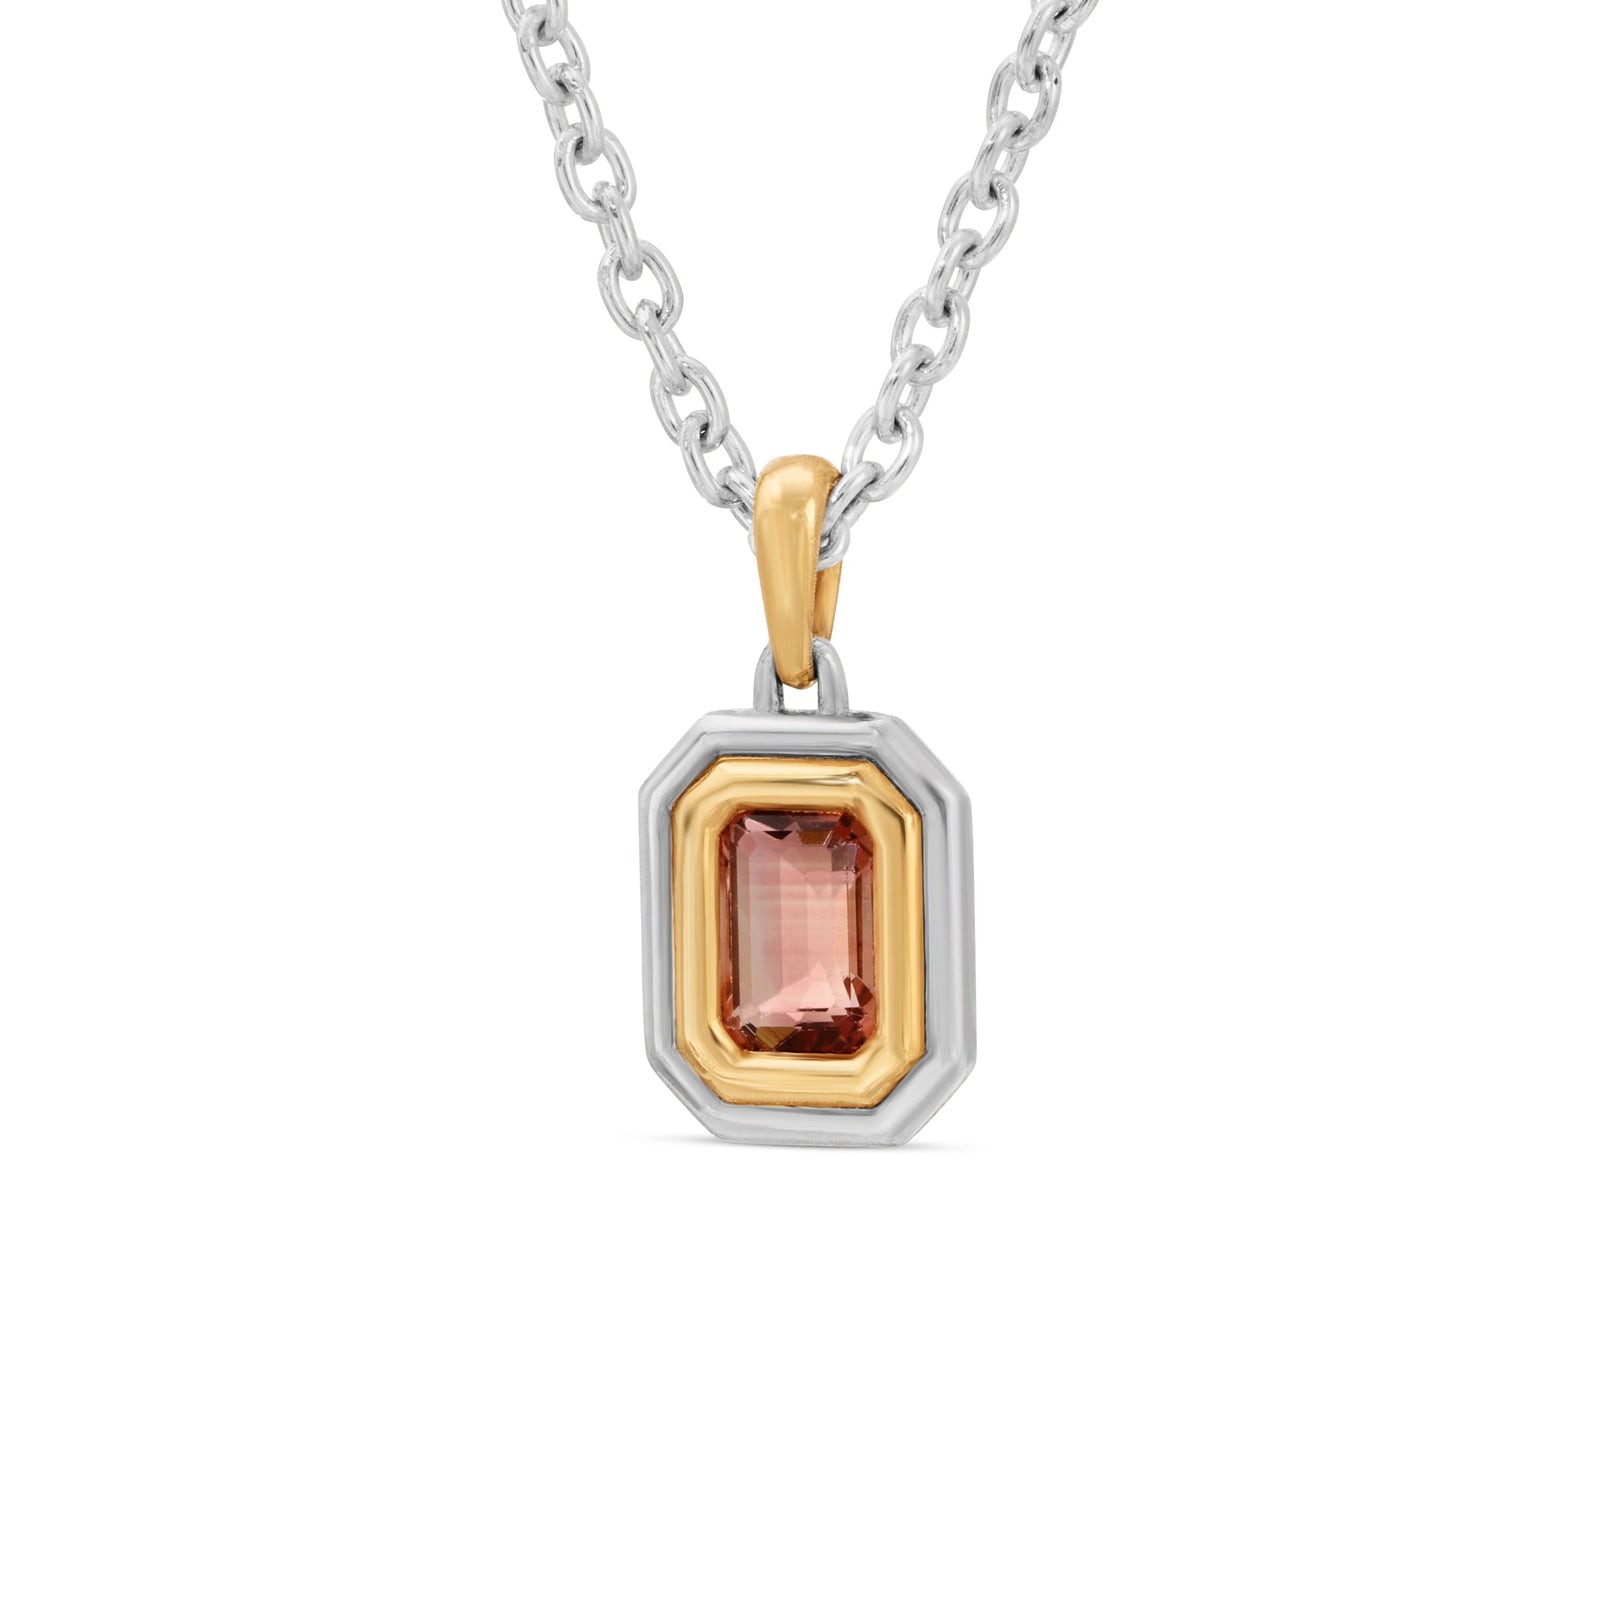 MAOR Equinox pink tourmaline pendant mixed metal necklace